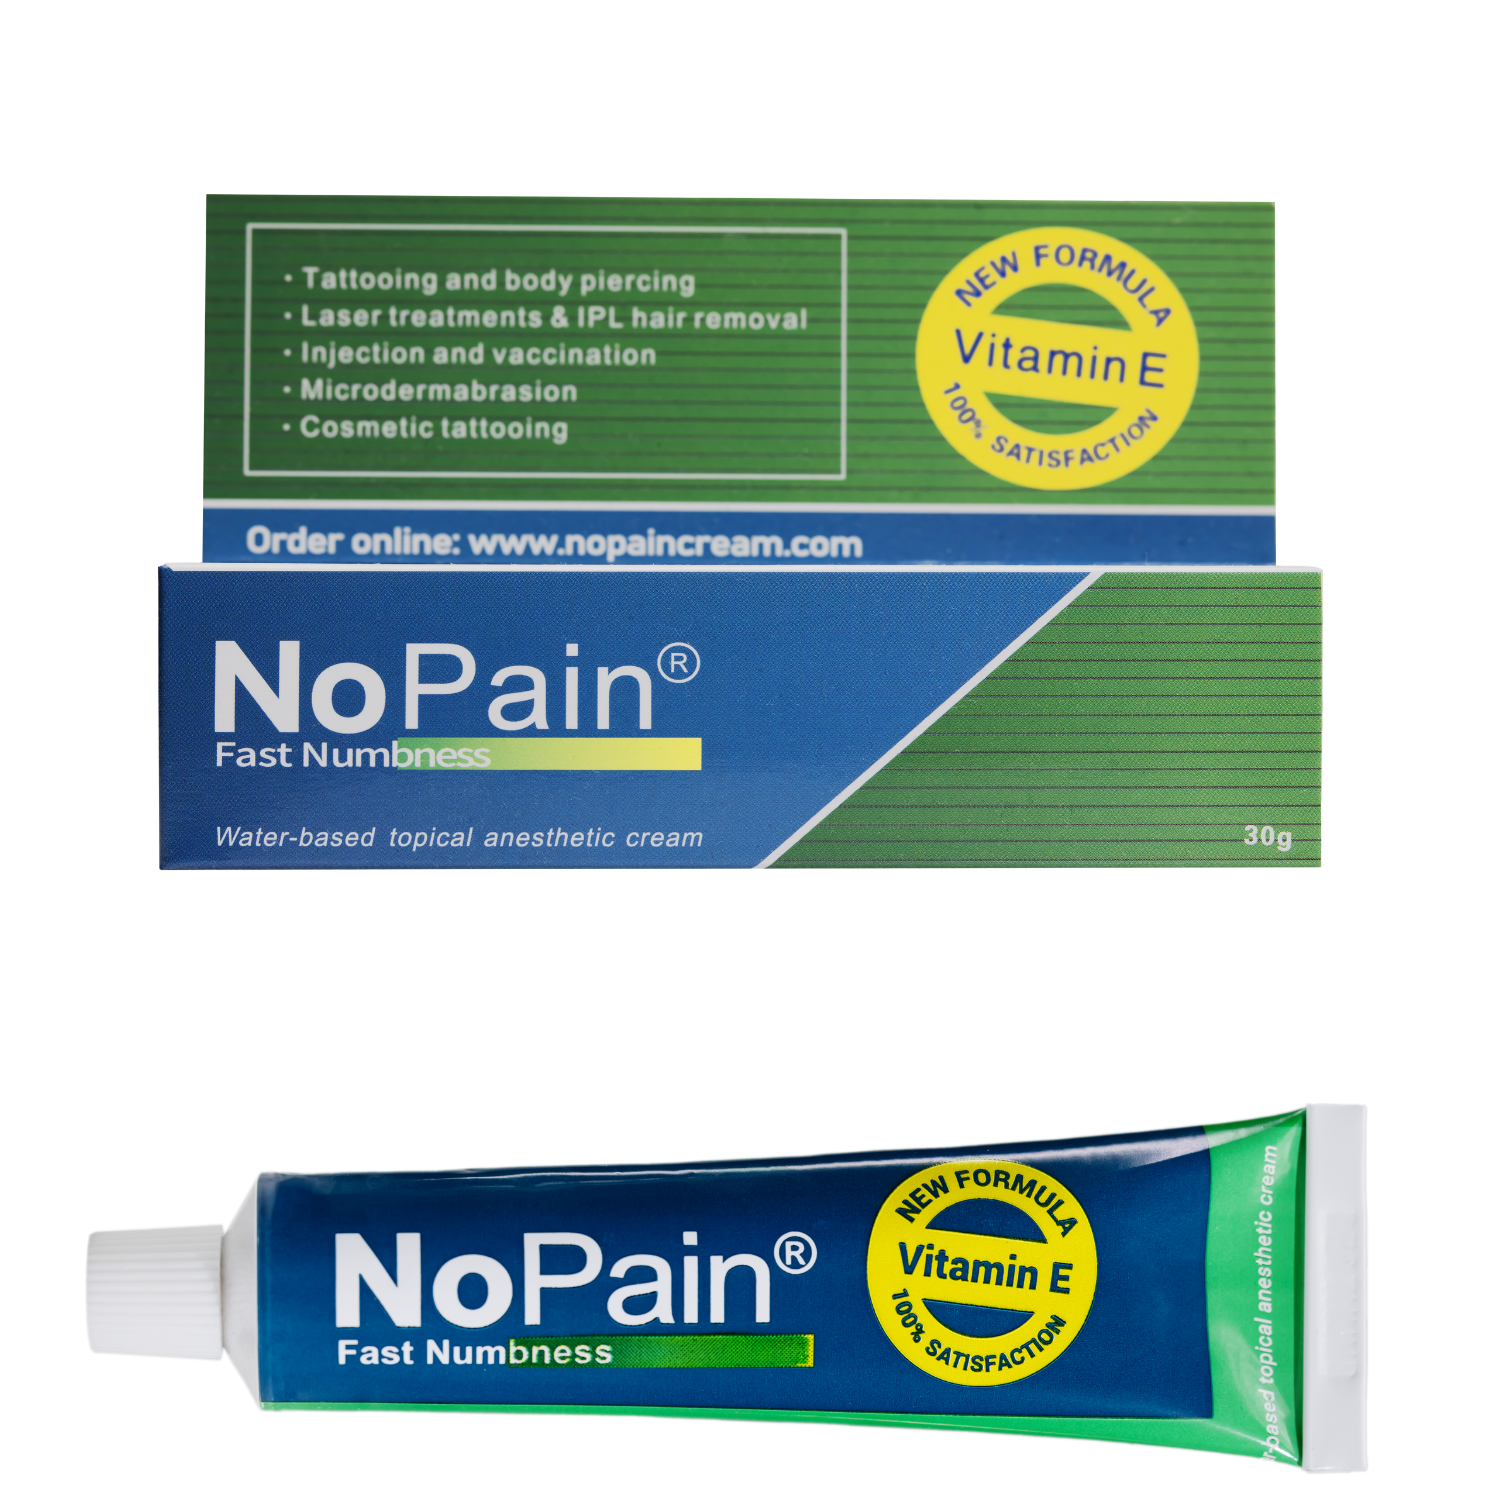 Dr. Numb® 4% Foam Soap - Maximum Strength Numbing for Pain Relief